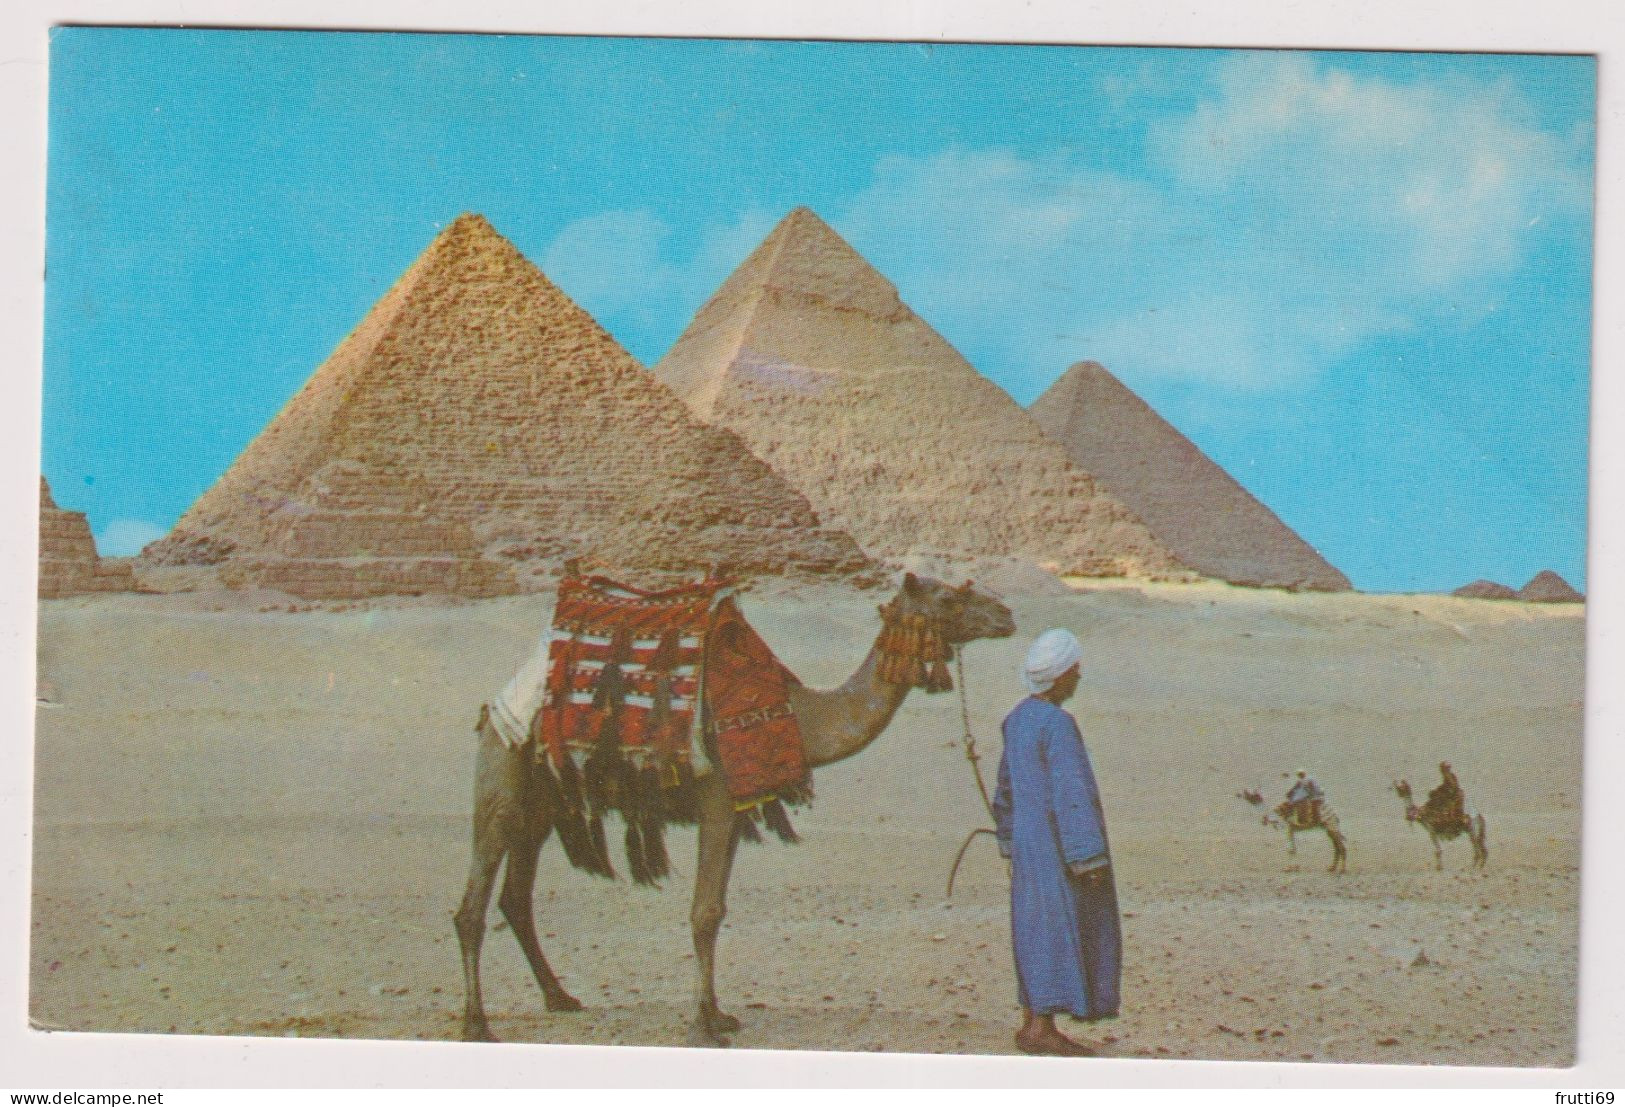 AK 198206  EGYPT - Giza - Kheops, Kephren And Mycerinos Pyramids - Pyramiden